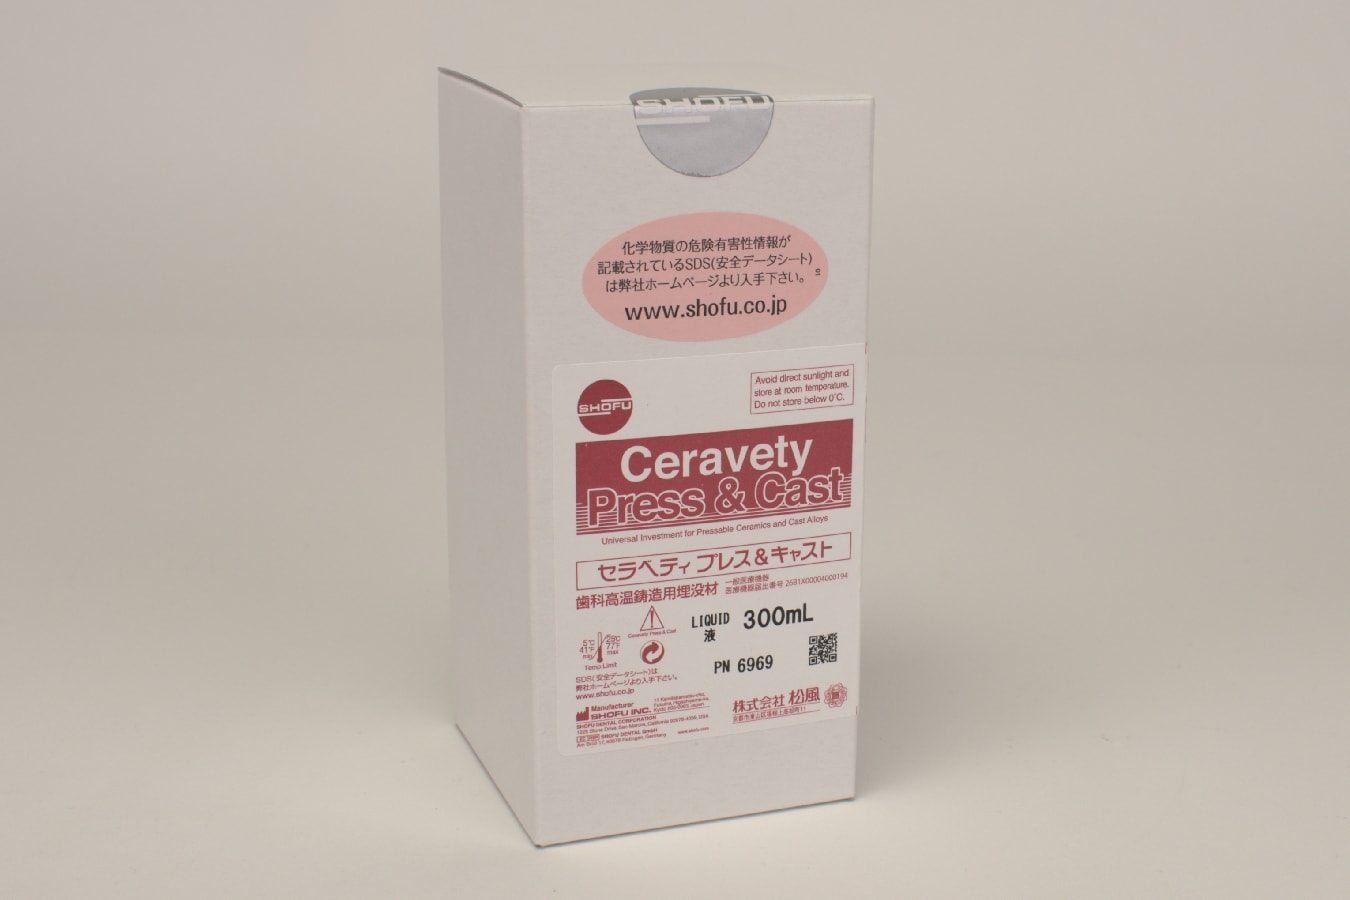 Ceravety Press & Cast Liquid 300ml